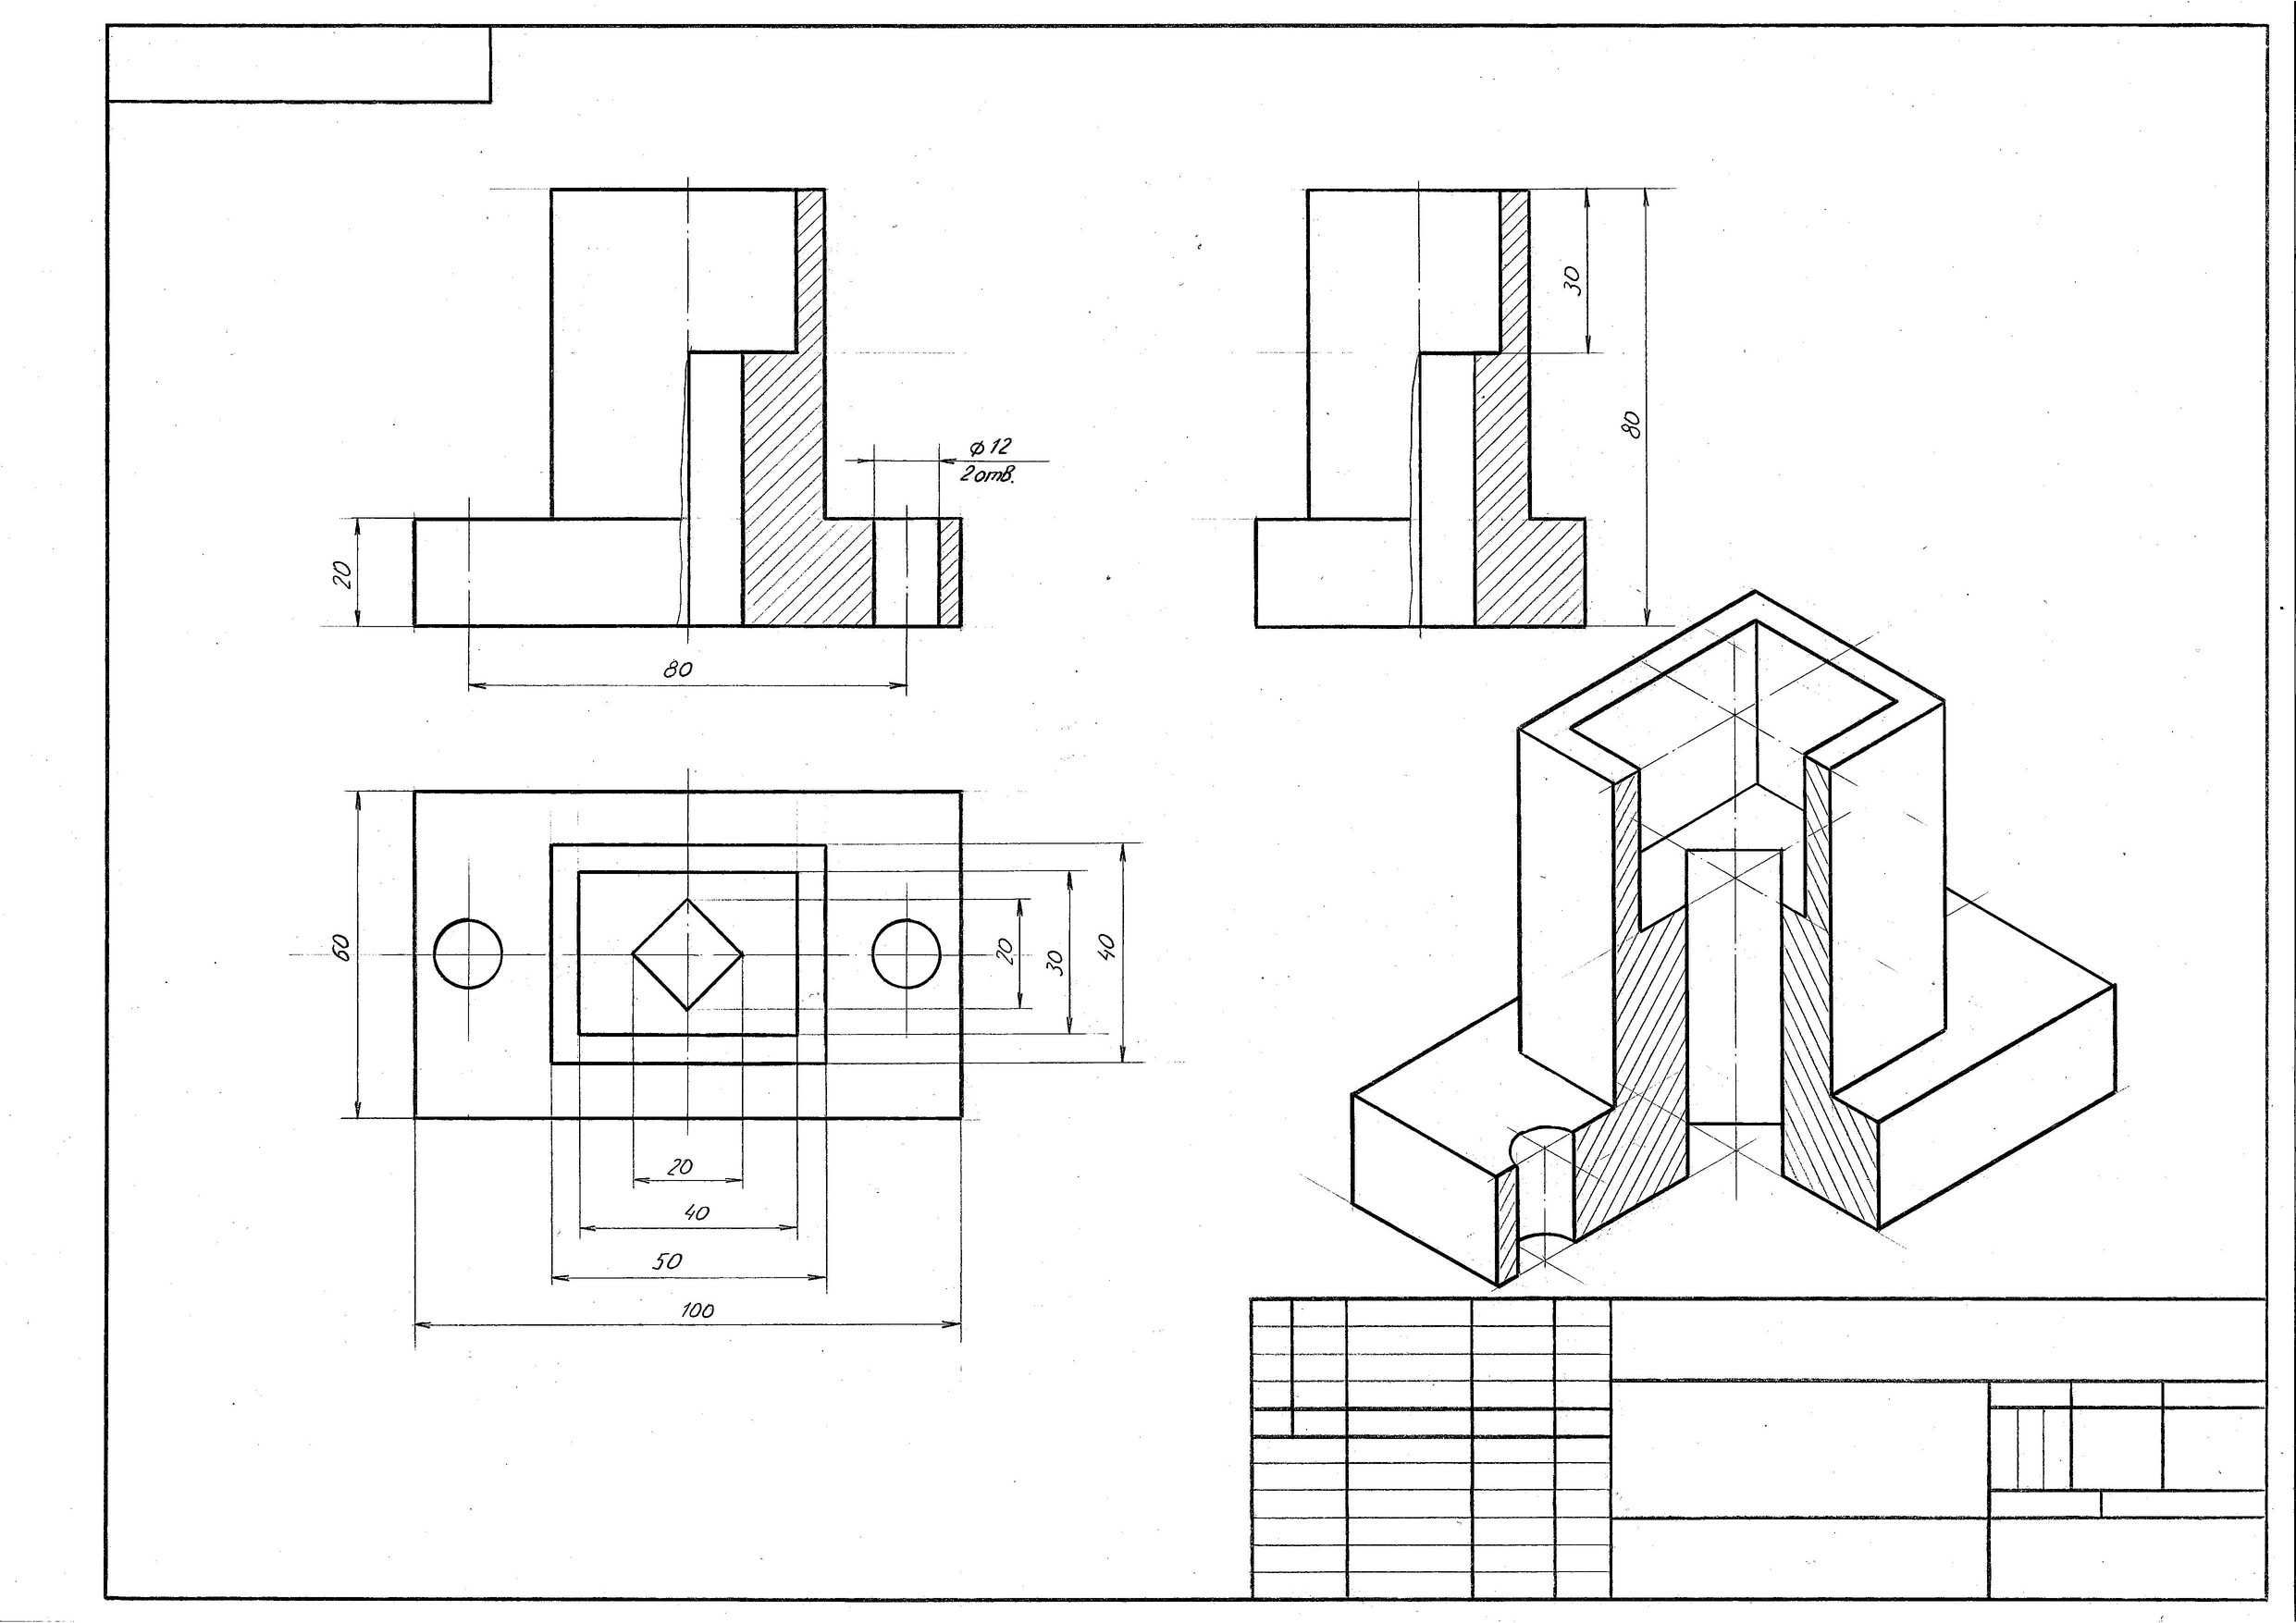 AutoCAD Solidworks  dasturida chizmalar (чертеж) xizmati.